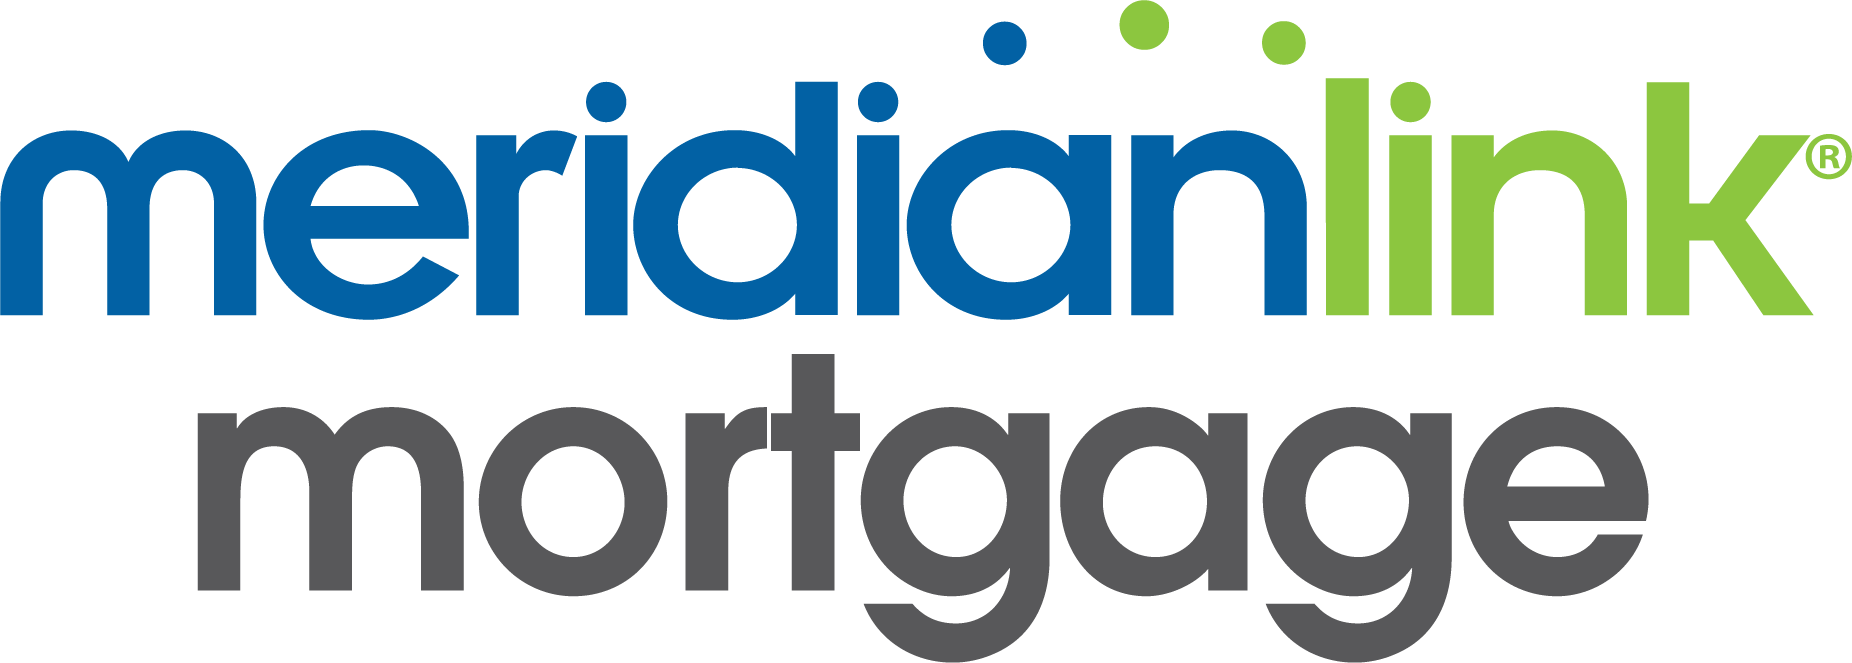 MeridianLink Mortgage Software - 1